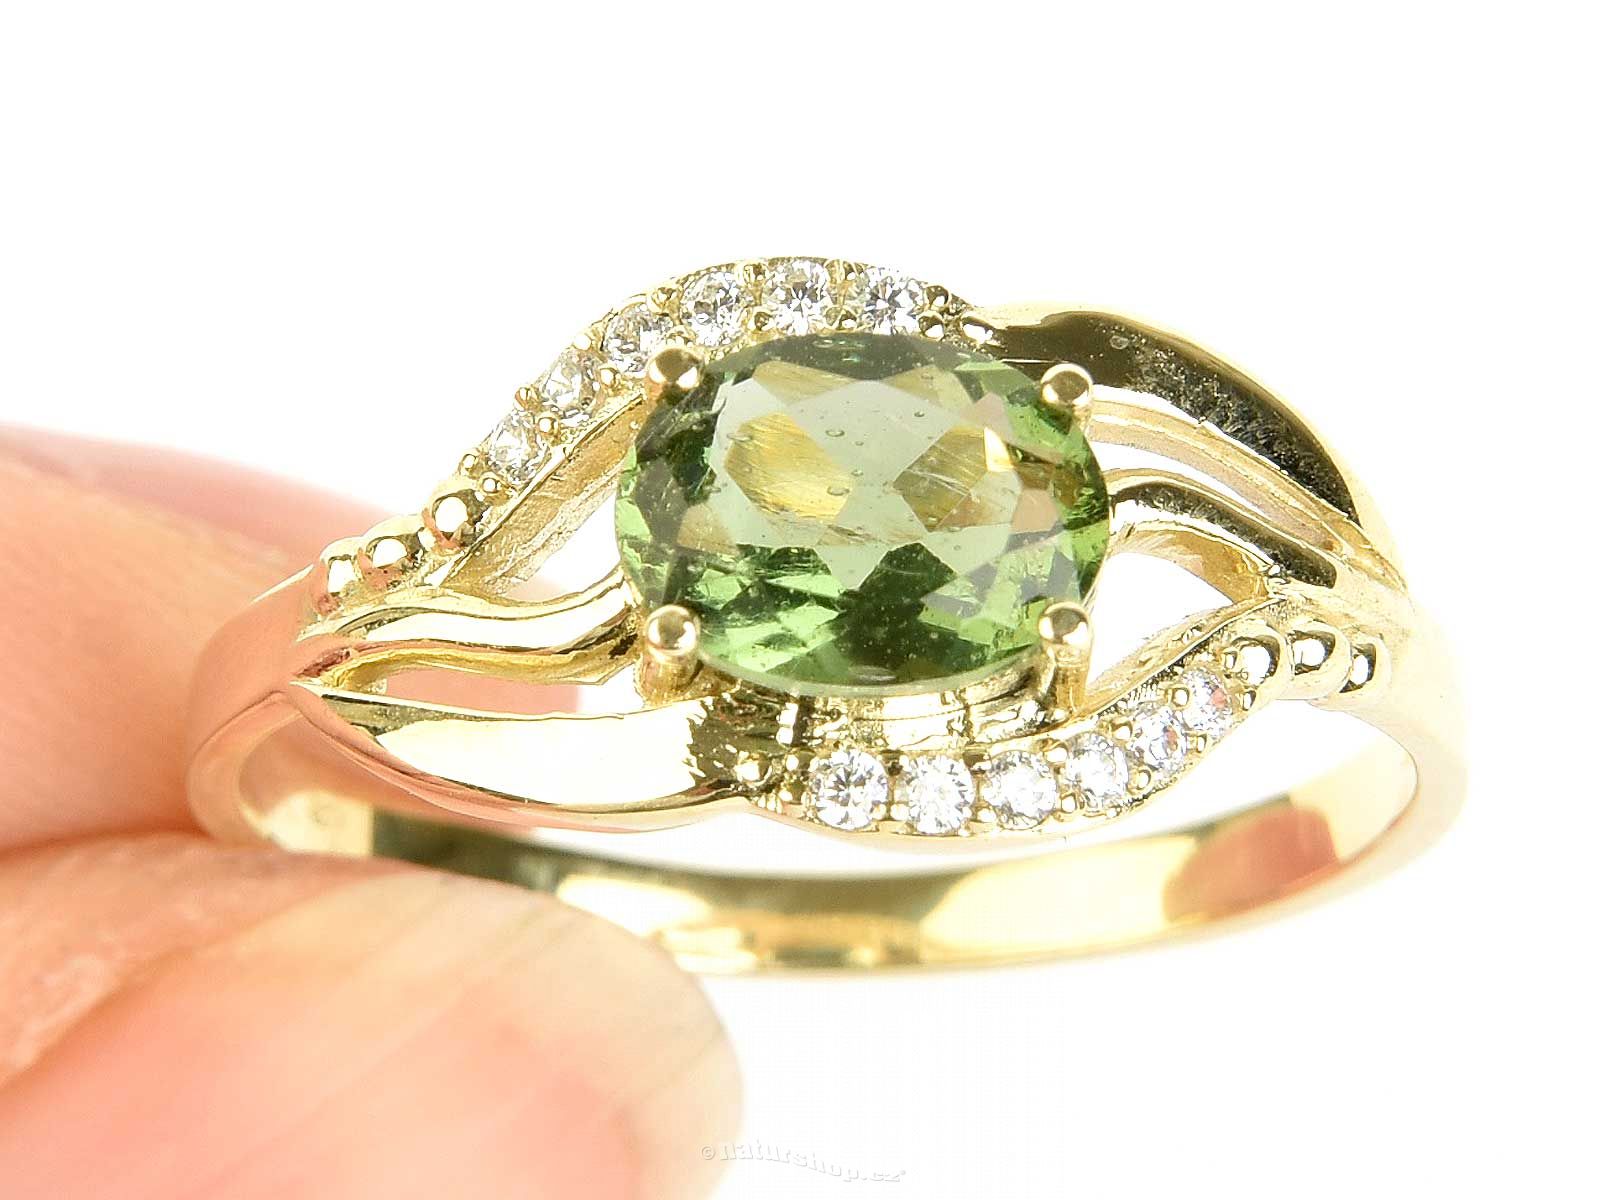 10K 10g 4.03 Ctw Star Sapphire Diamond Men's Yellow Gold Ring, Size 9.75 |  Property Room